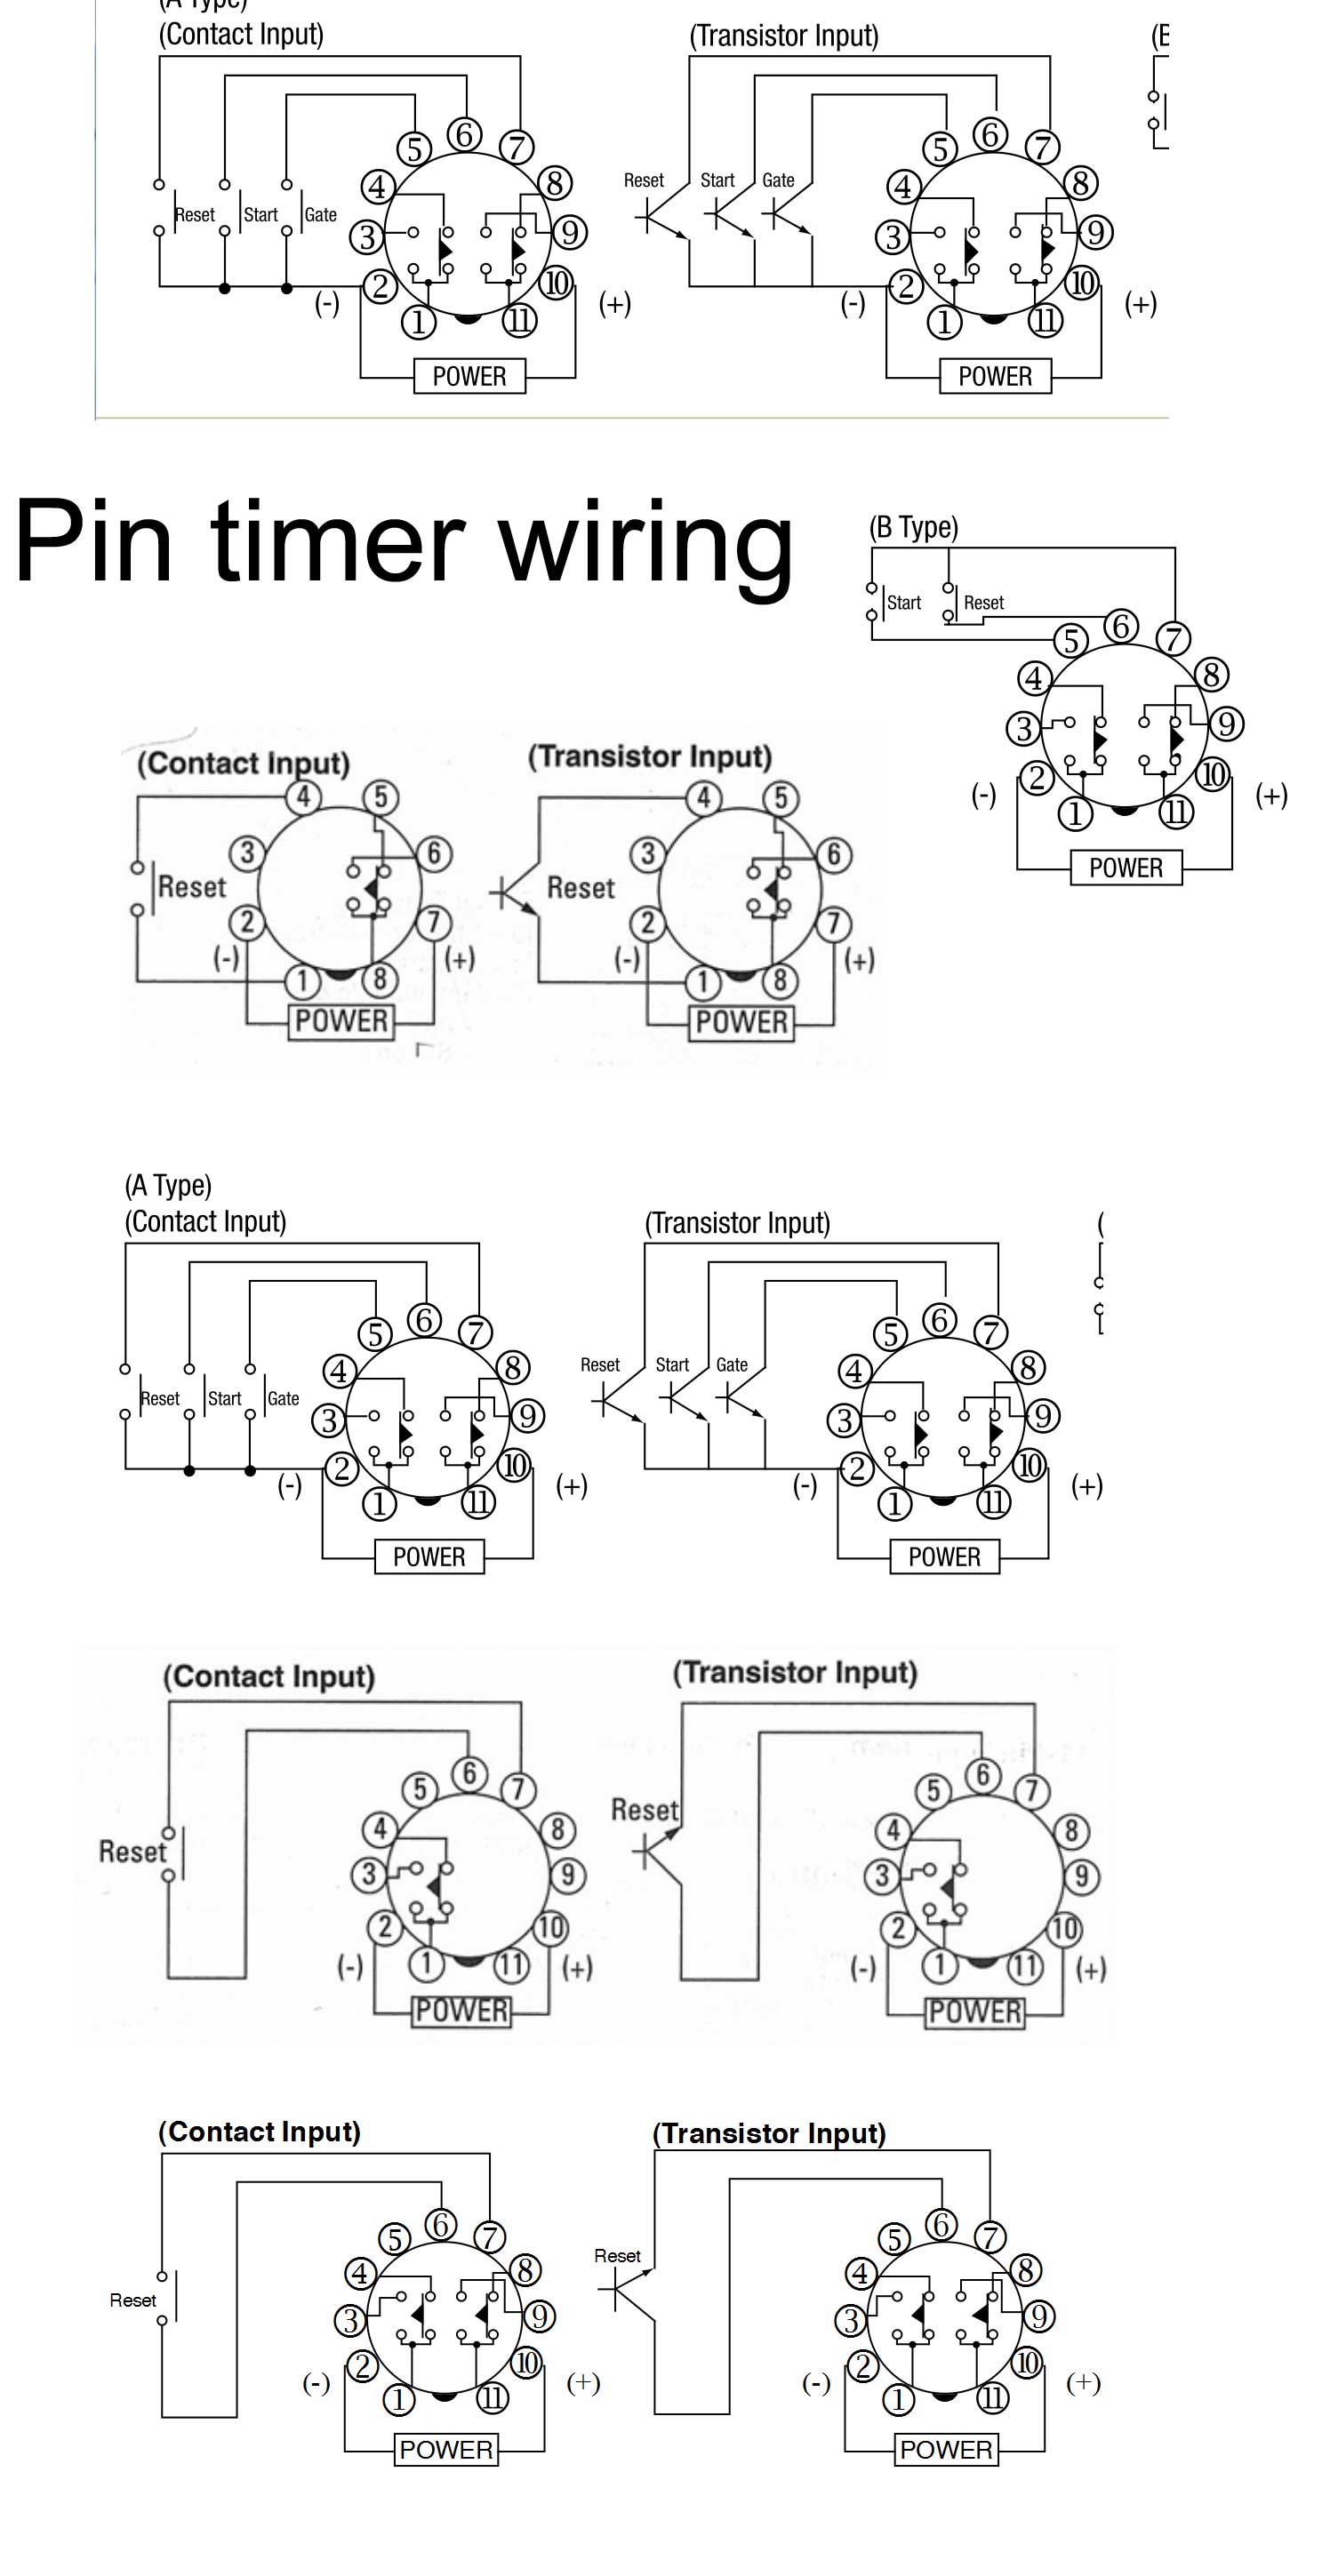 omron h3cr wiring diagram help